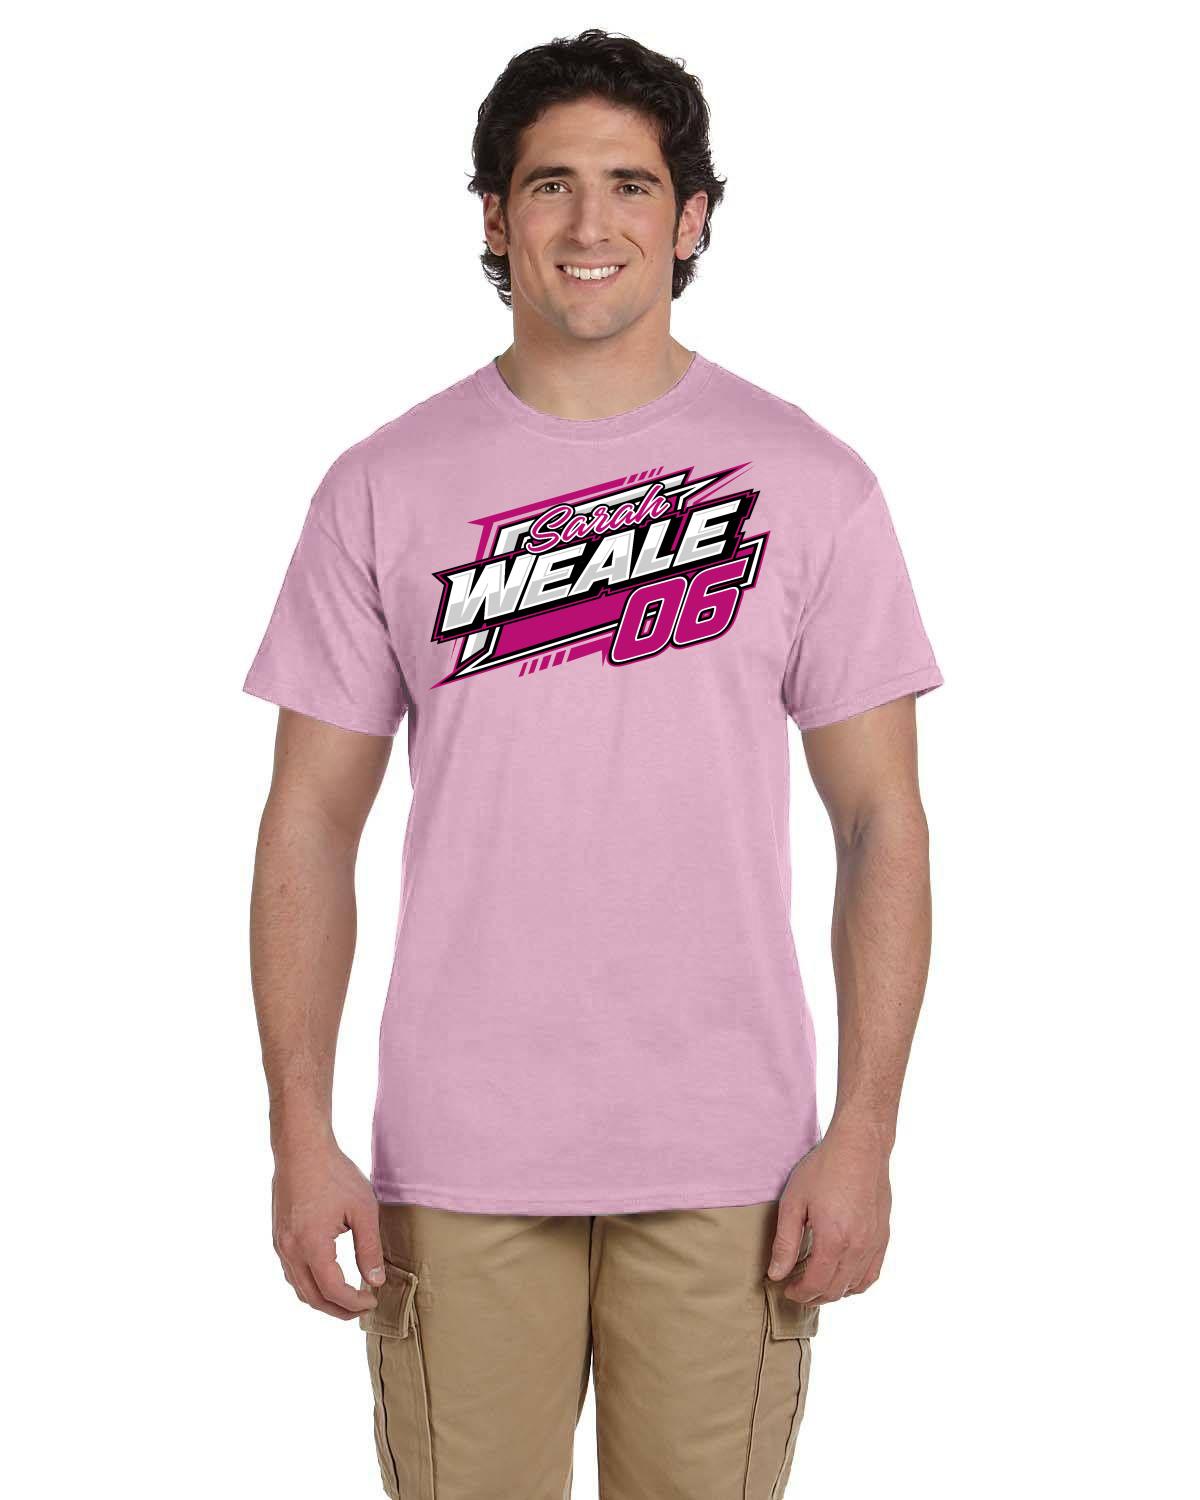 Sarah Weale Racing Men's T-Shirt